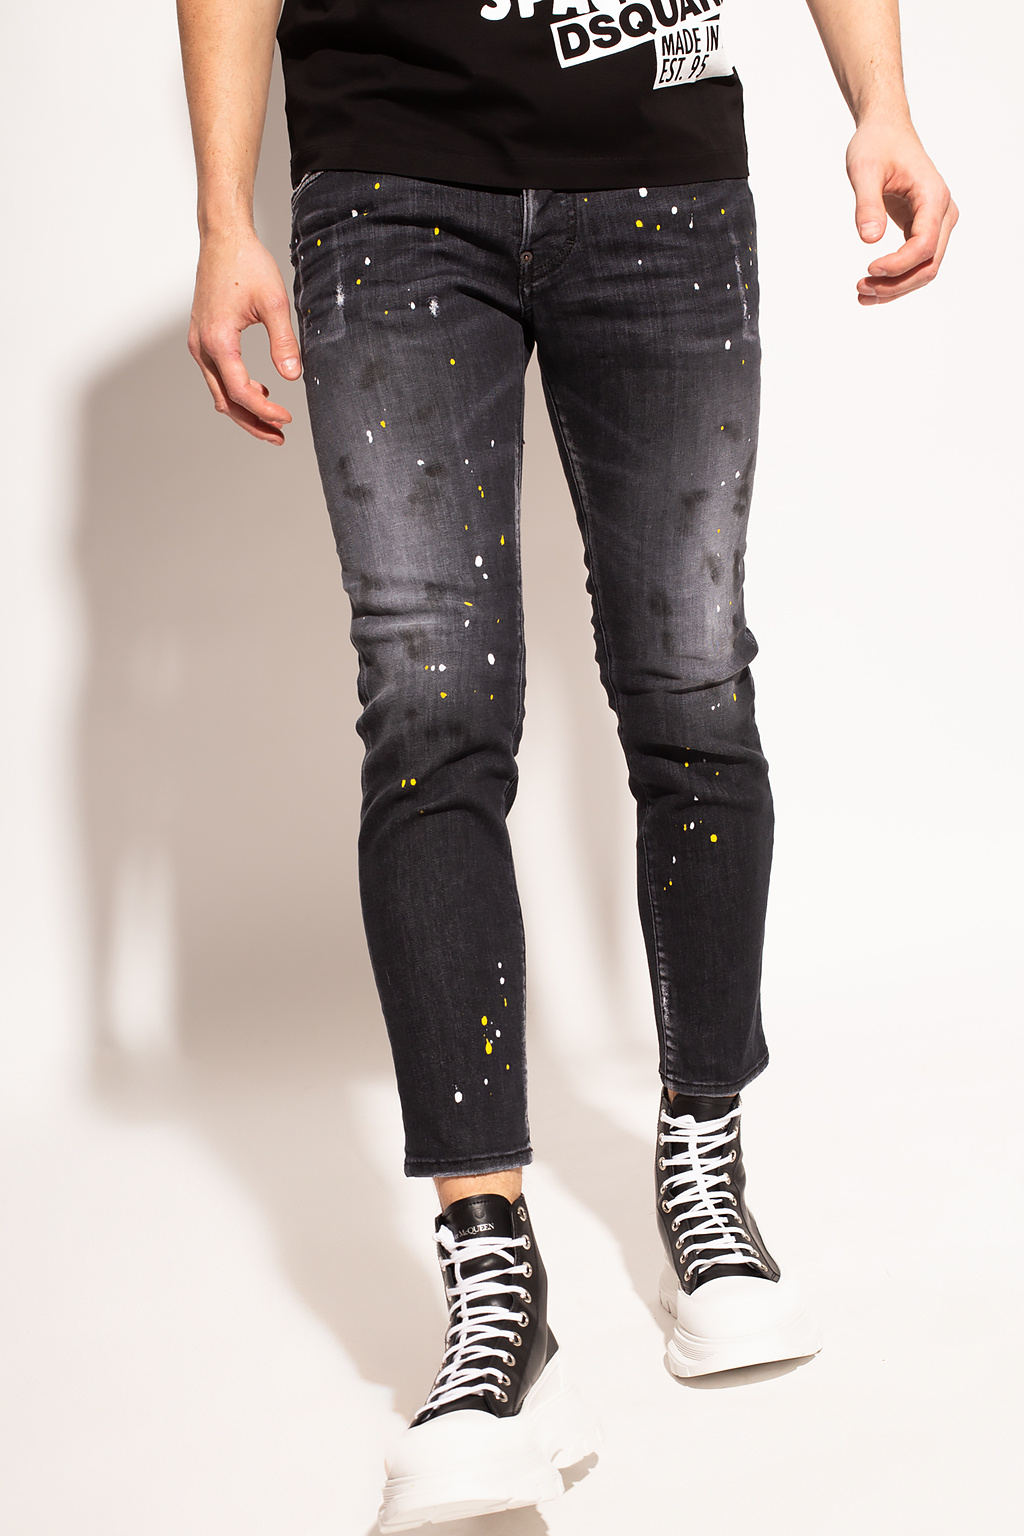 IetpShops | Dsquared2 track | fit drawstring-print Kids | Clothing pants slim faded Dkny Dsquared2 item effect jeans Men\'s